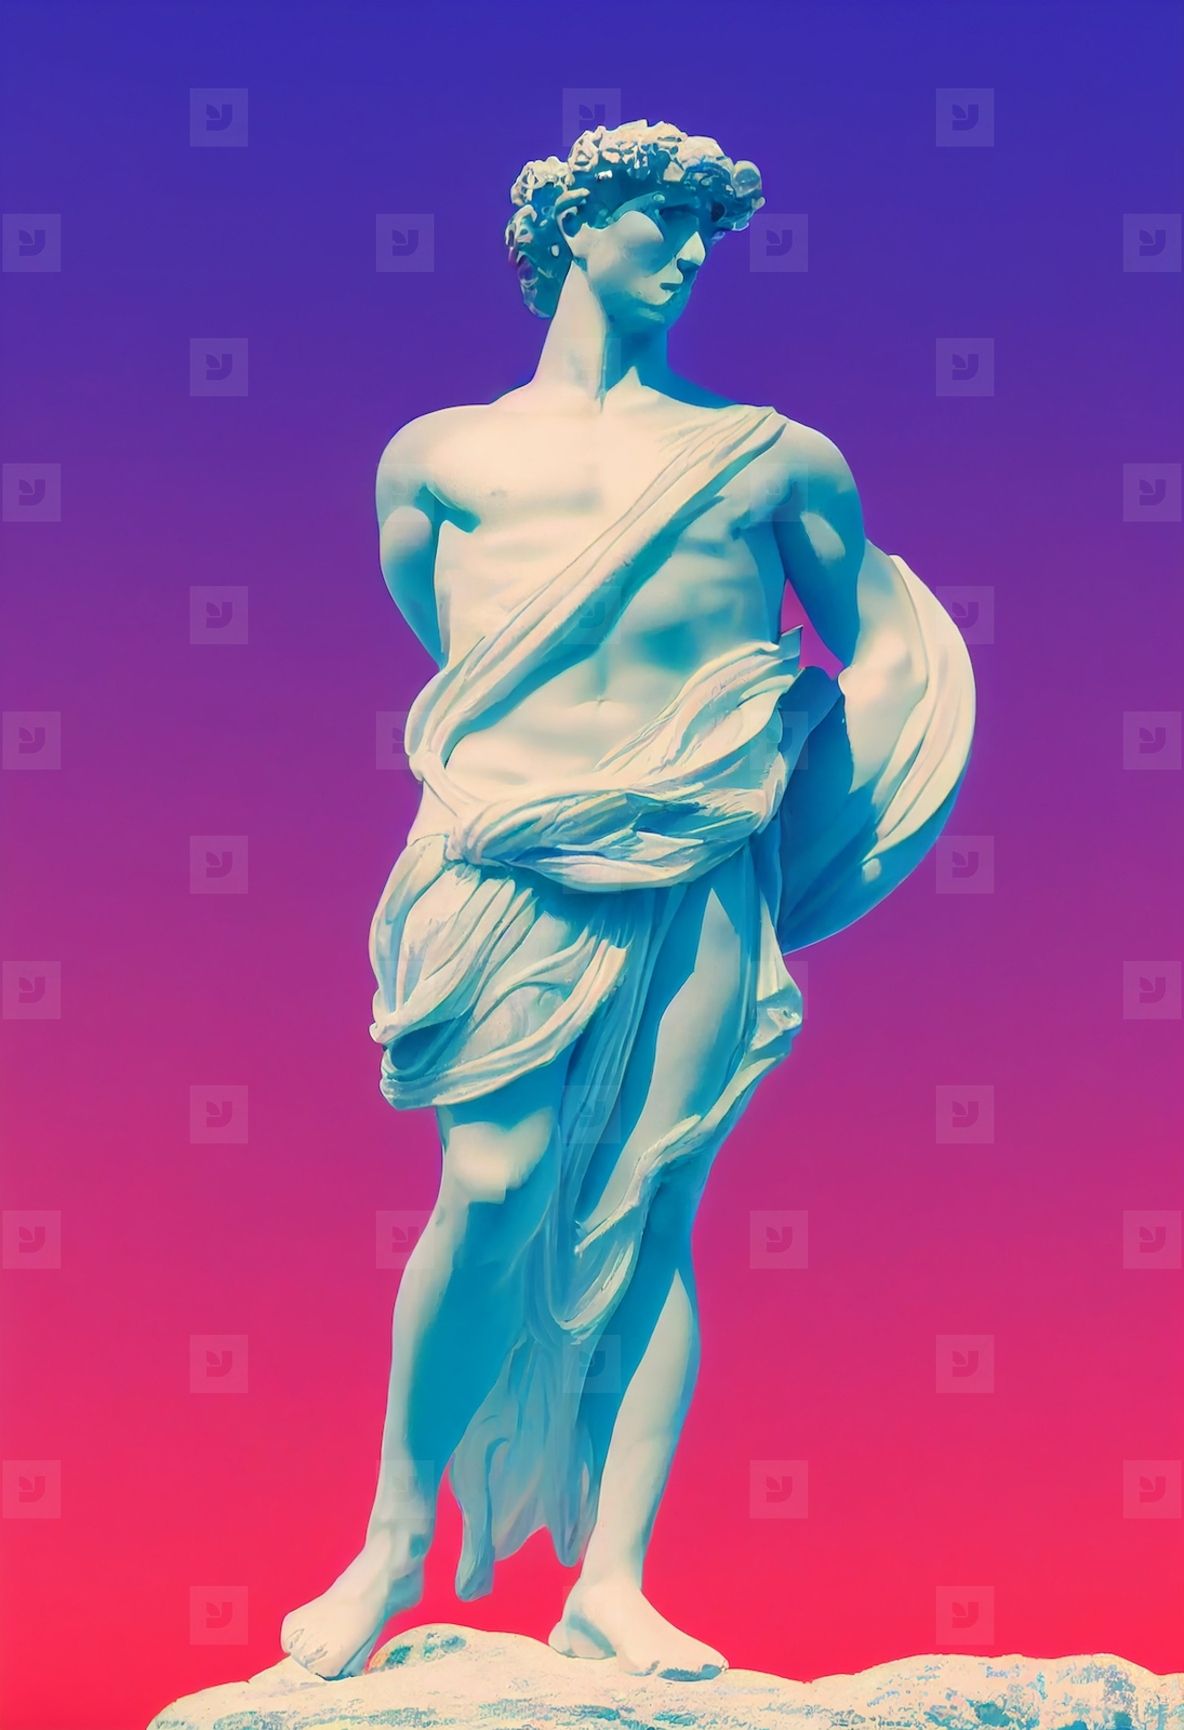 Abstract greek god sculpture in retrowave city pop design, vapor